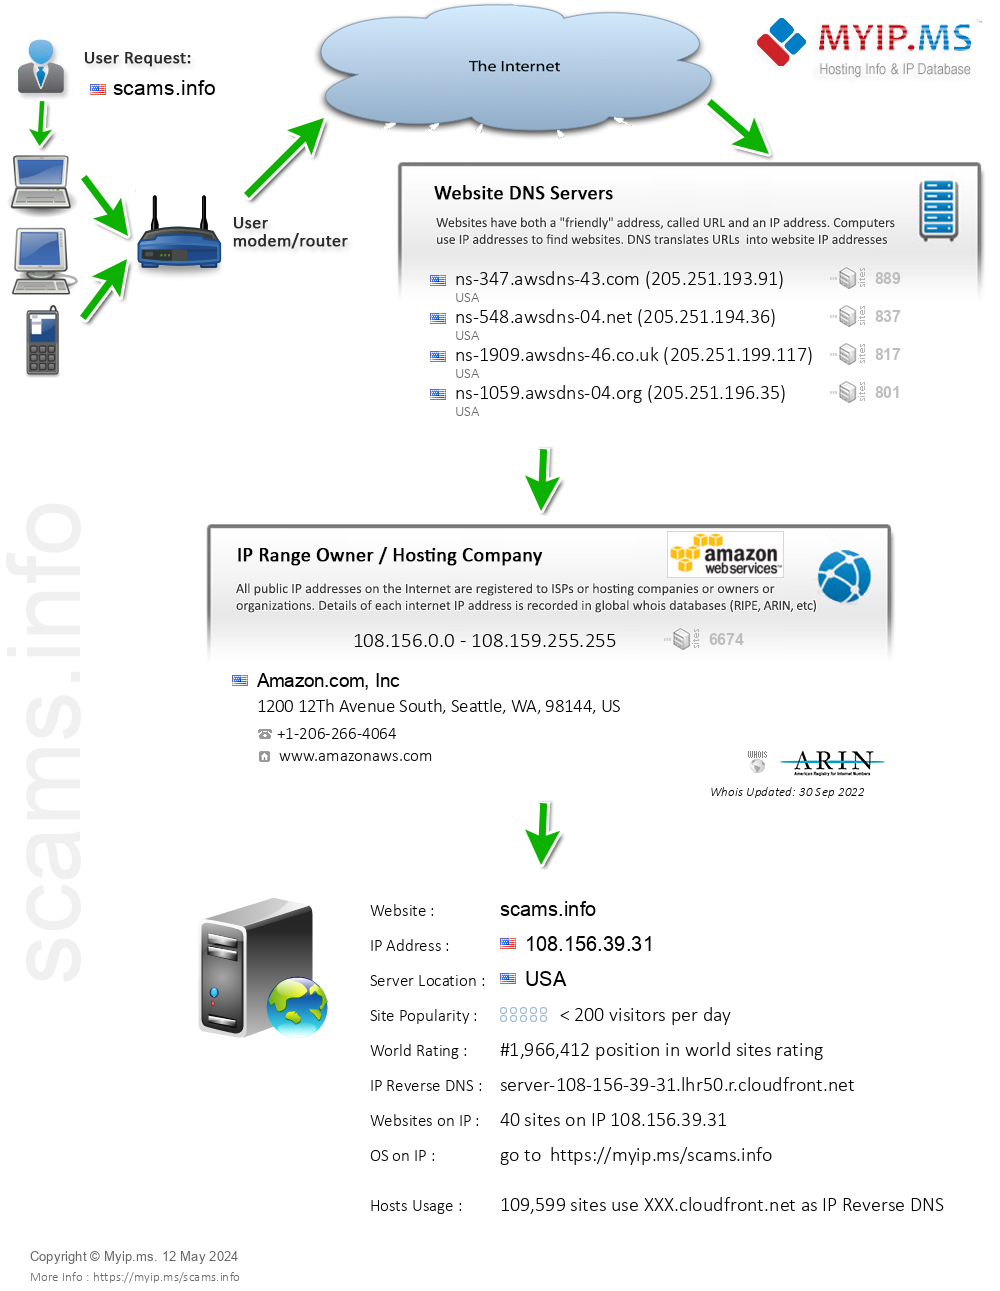 Scams.info - Website Hosting Visual IP Diagram